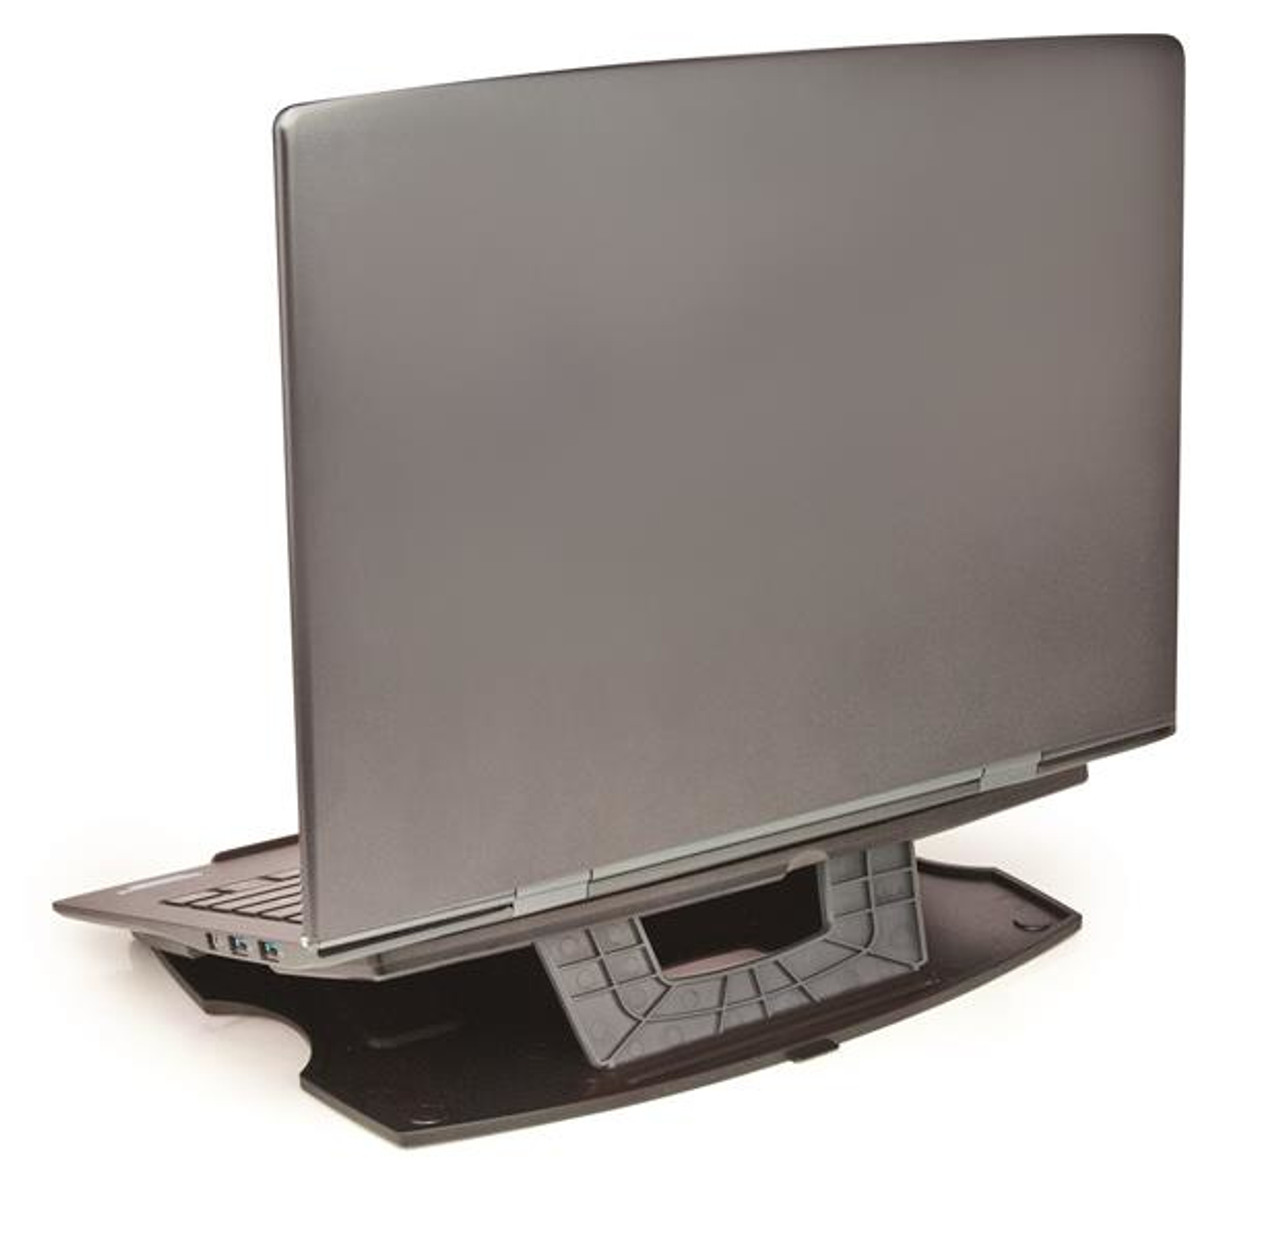 StarTech.com Portable Laptop Stand - Adjustable